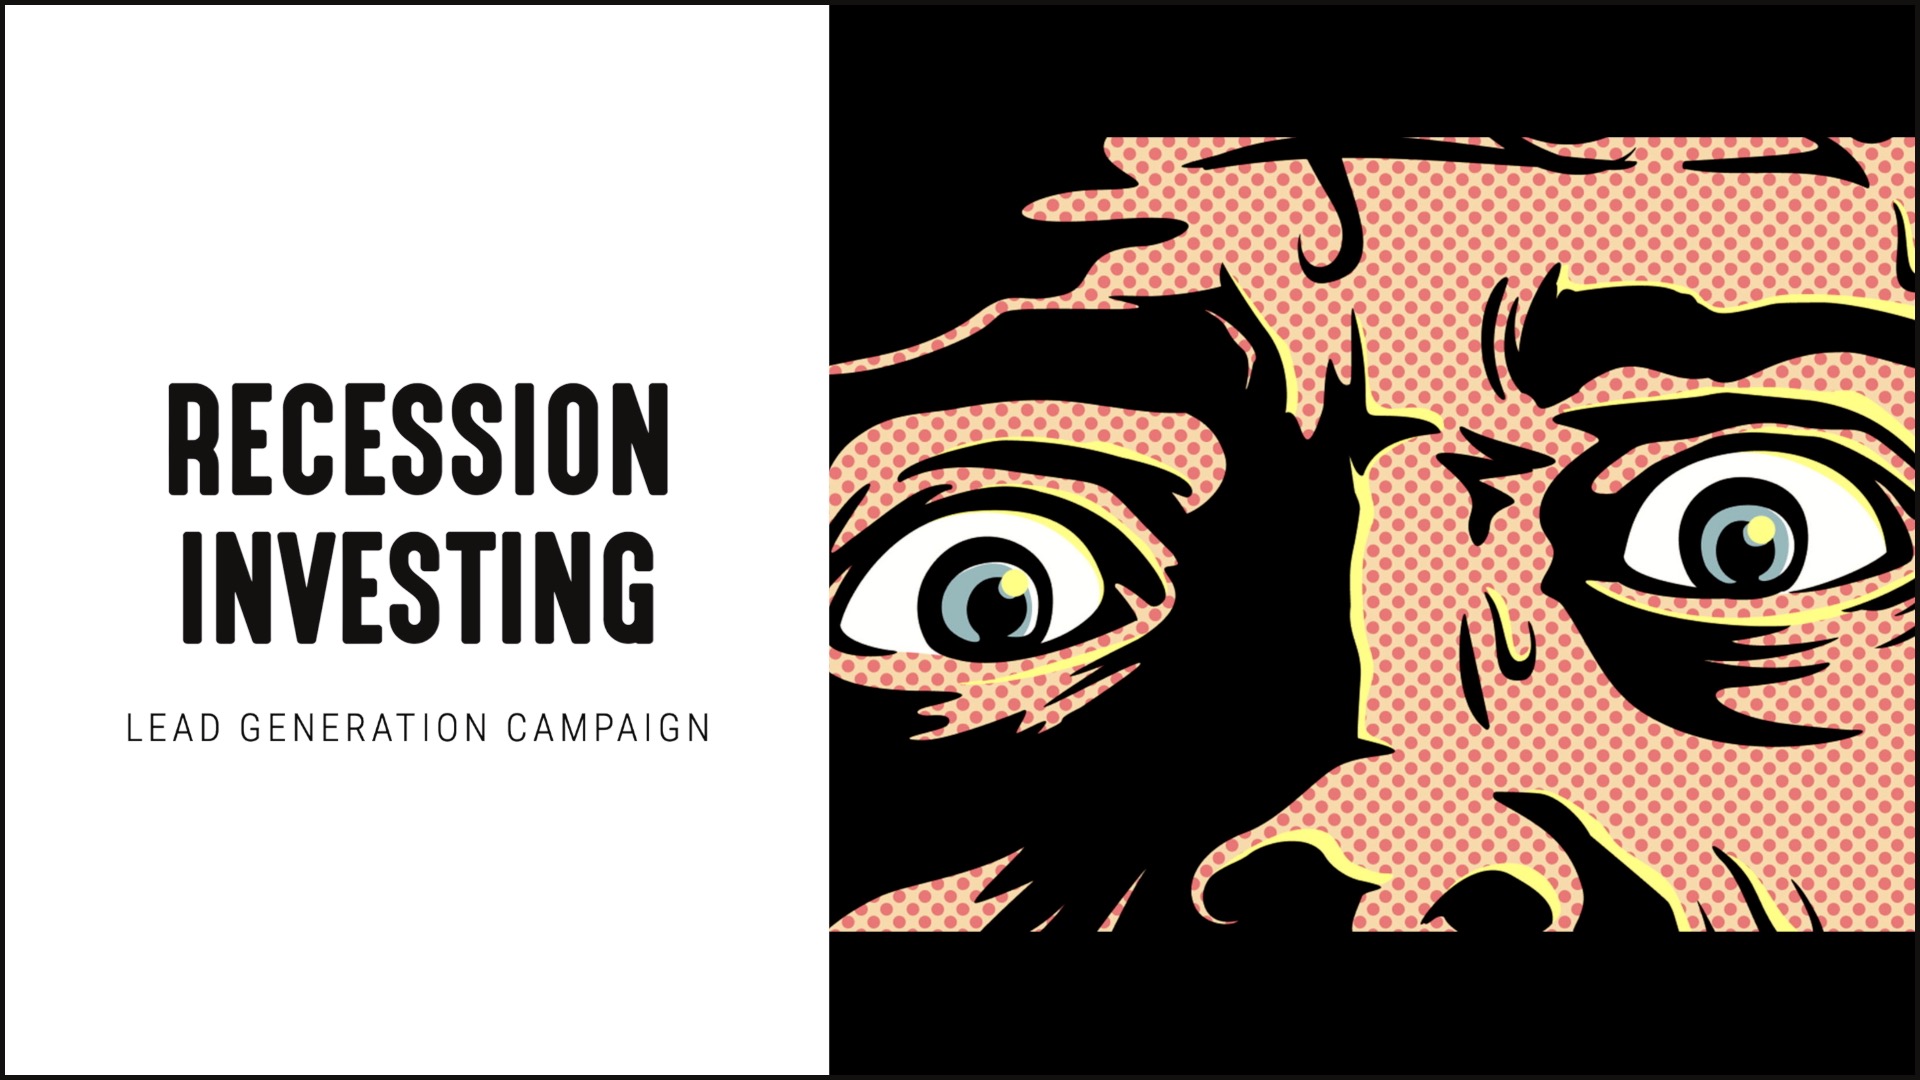 [NEW] Recession Investing – Lead Generation Campaign